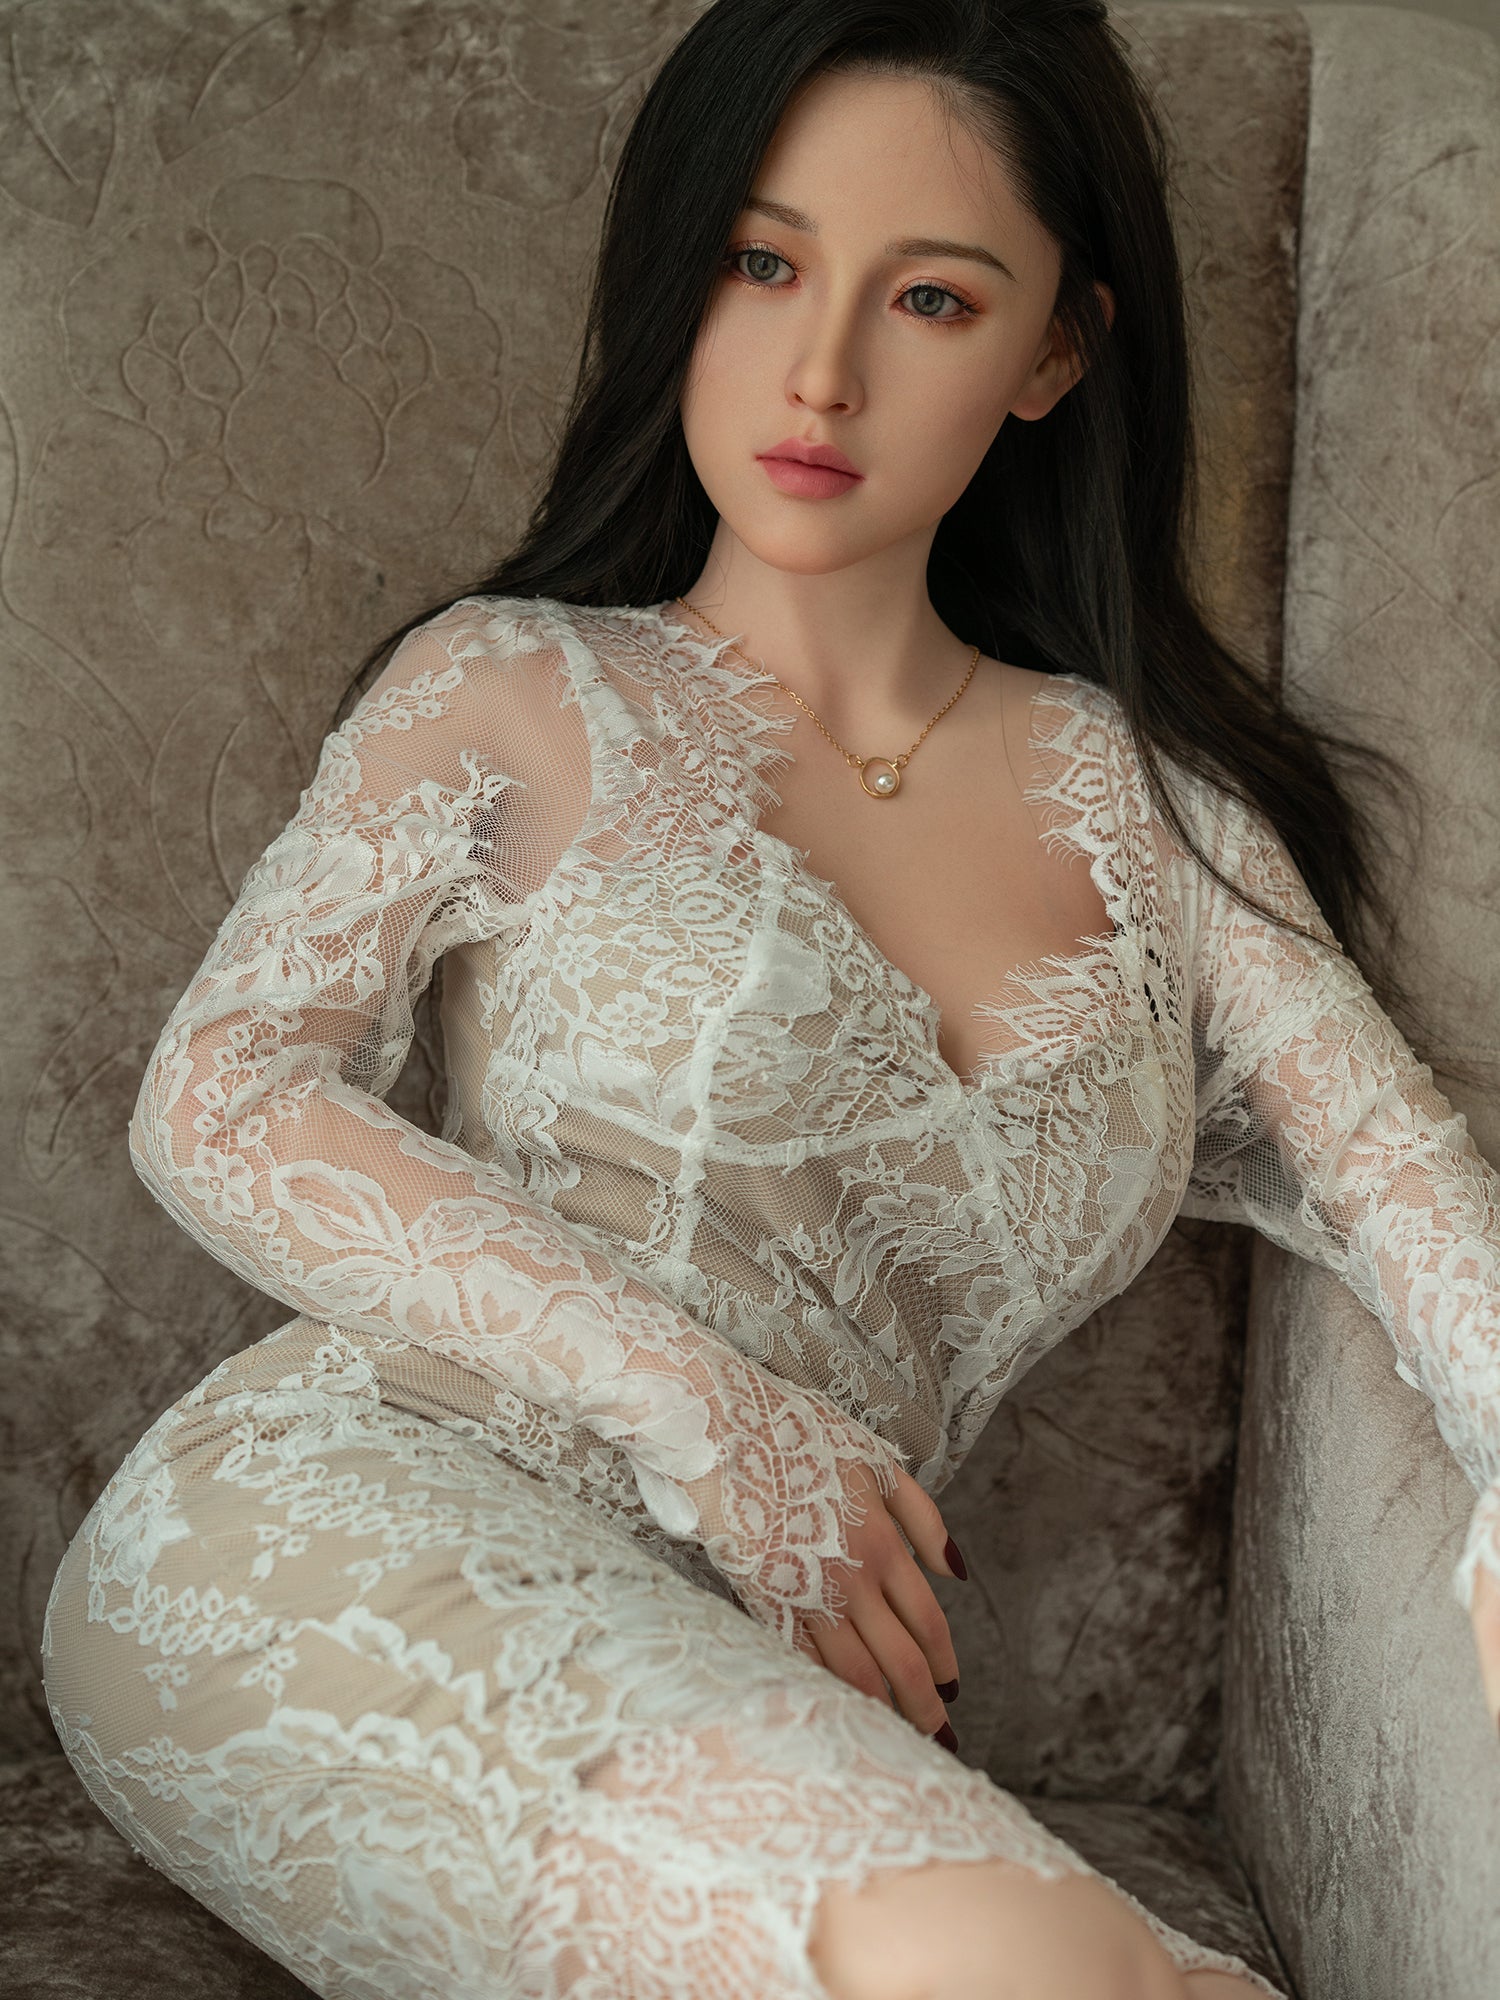 Zelex Doll 165 cm F Fusion - Yvonne V3 (SG) | Buy Sex Dolls at DOLLS ACTUALLY